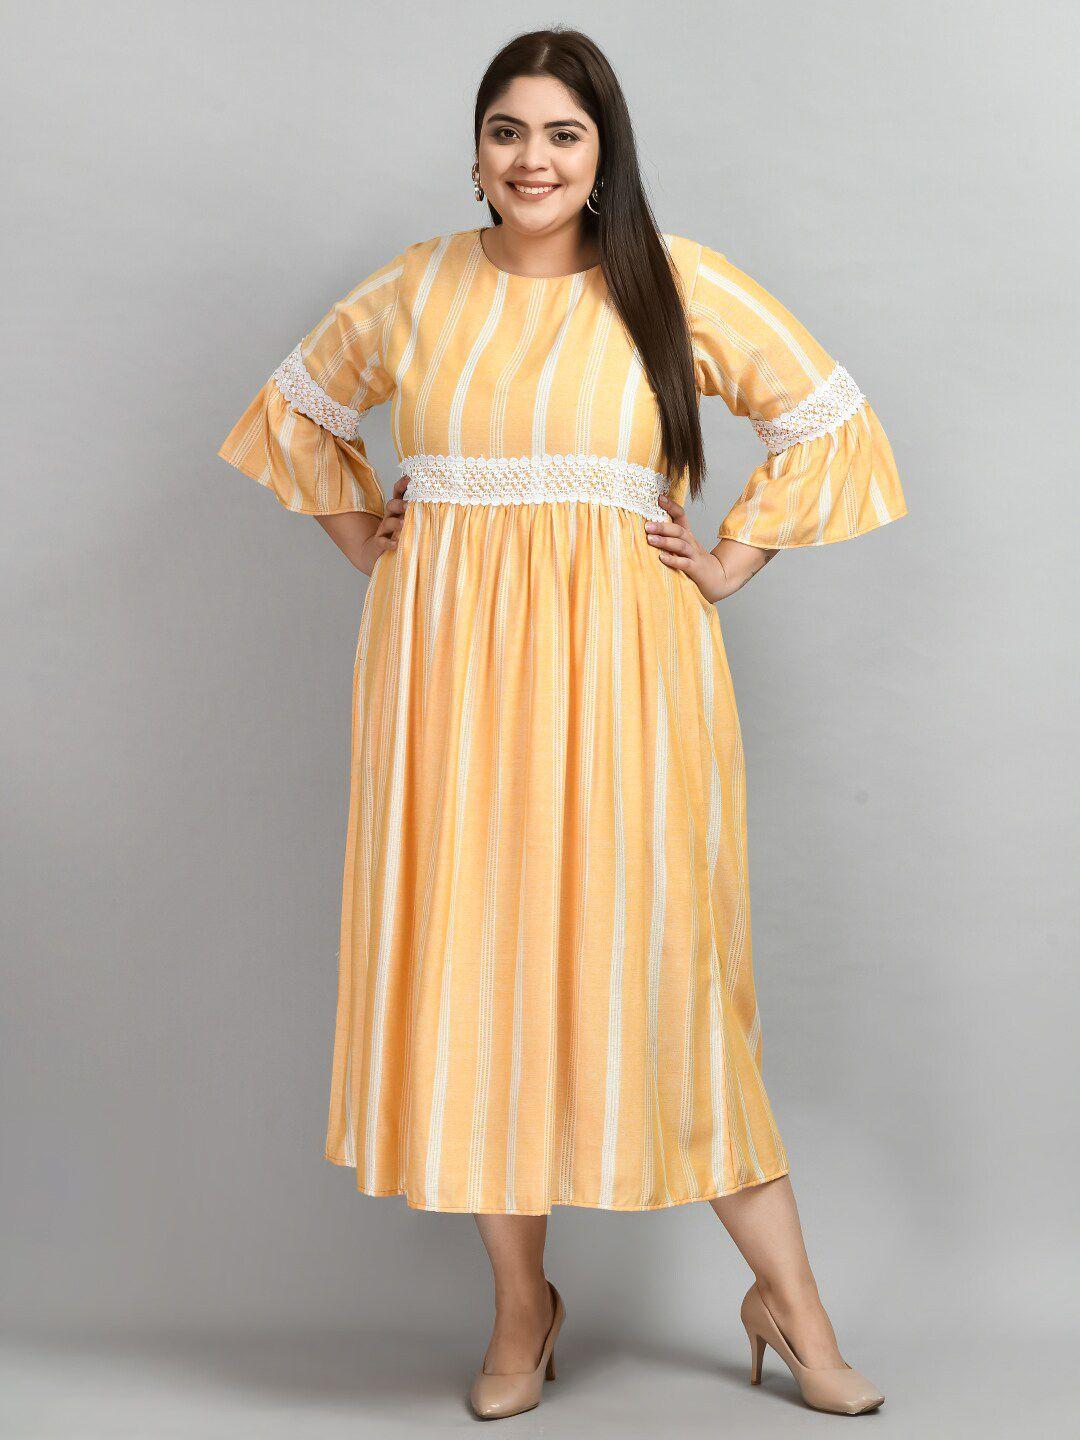 prettyplus by desinoor com yellow striped empire midi dress